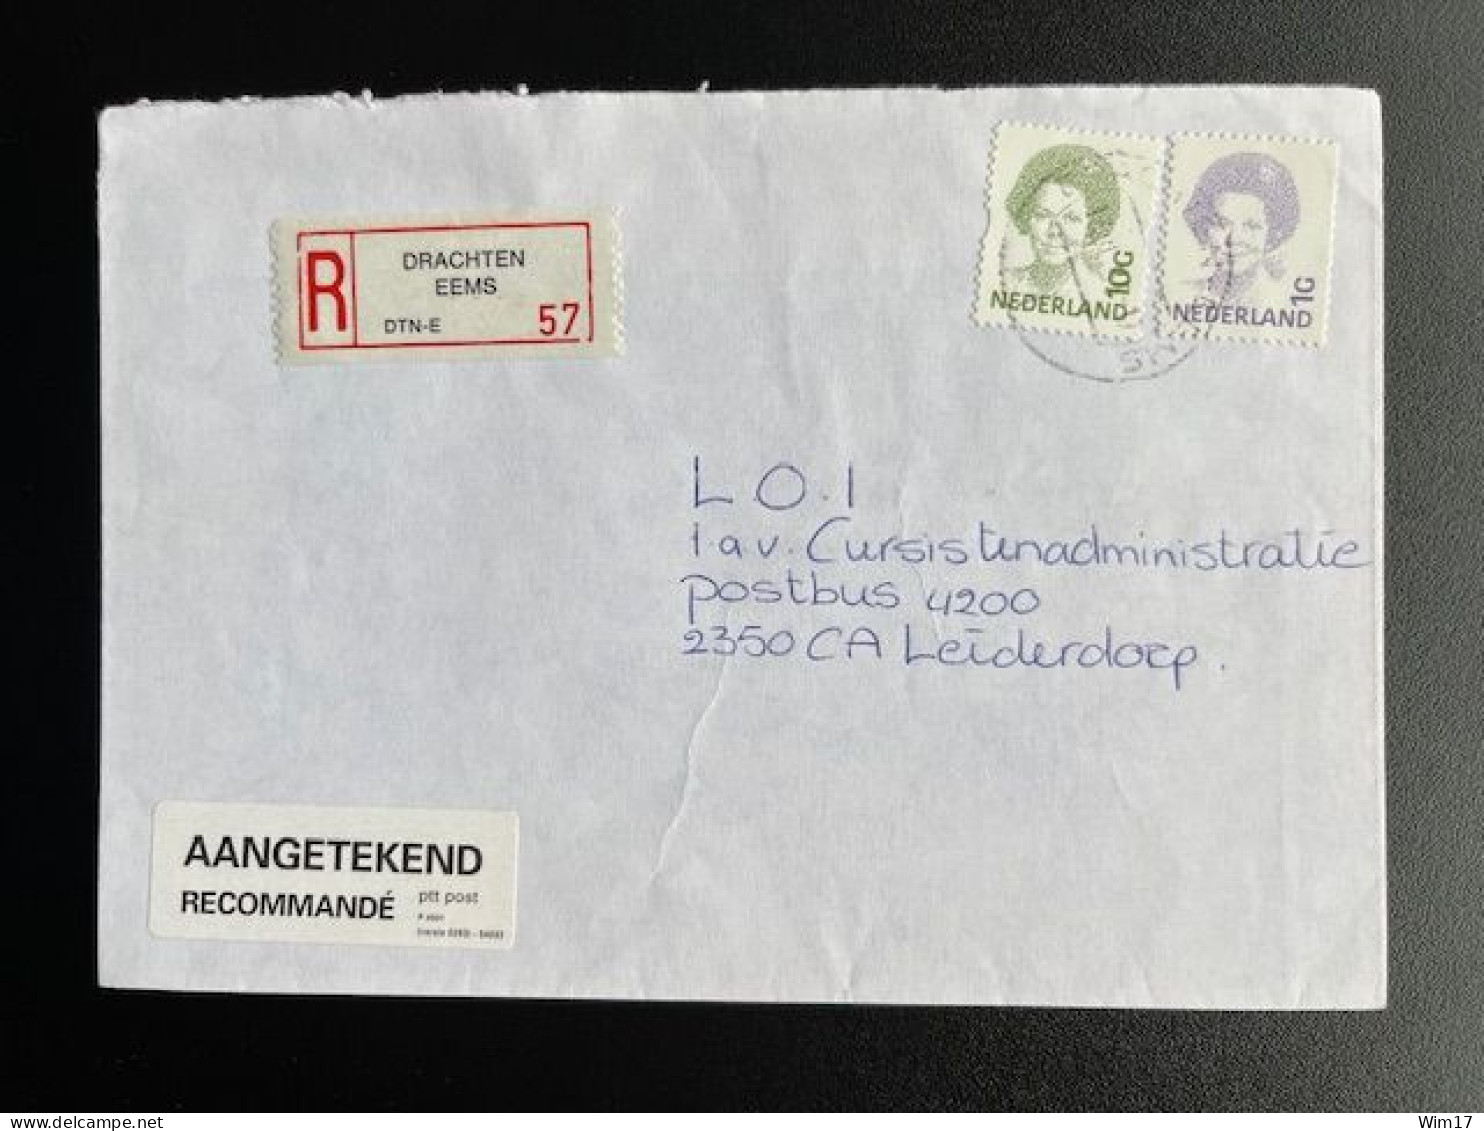 NETHERLANDS 1995 REGISTERED LETTER DRACHTEN EEMS TO LEIDERDORP 13-06-1995 NEDERLAND AANGETEKEND - Covers & Documents